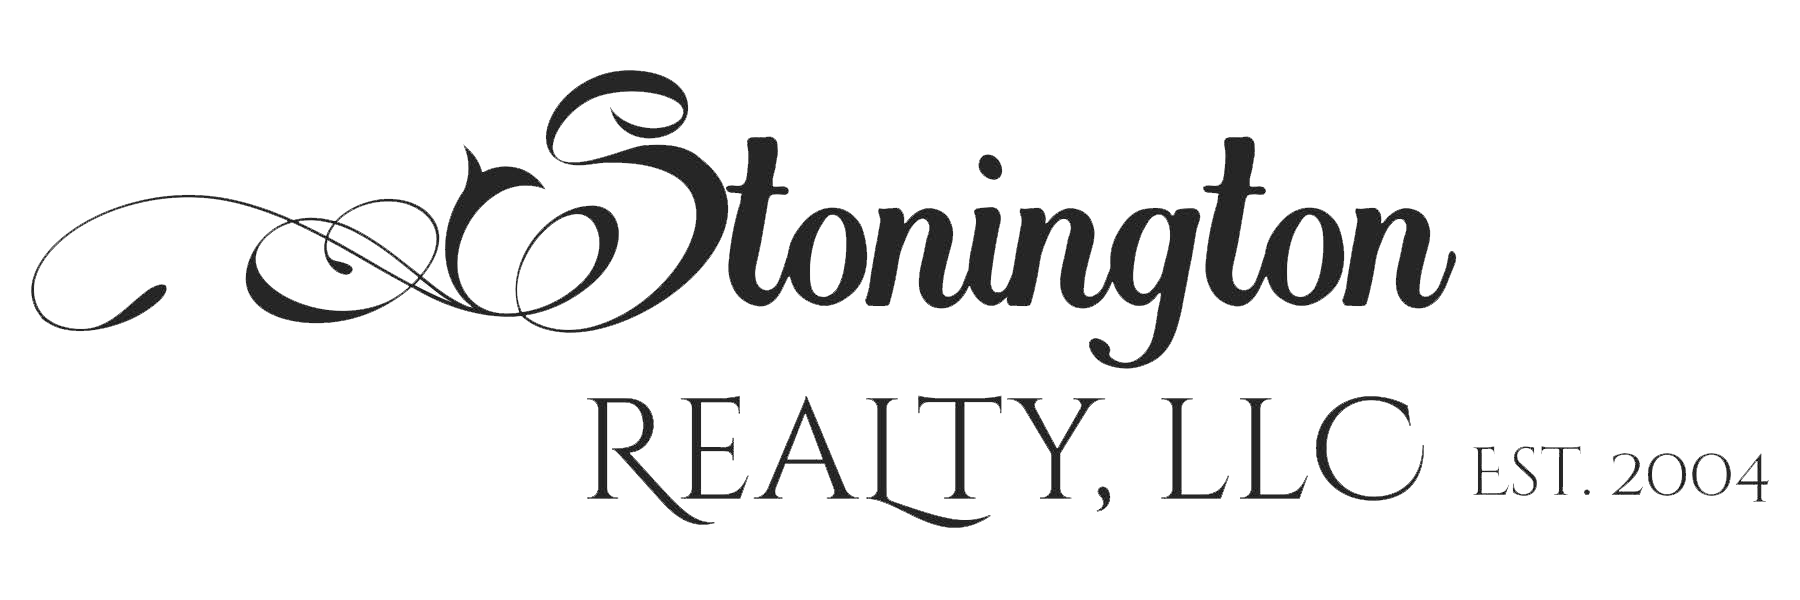 Stonington Realty LLC